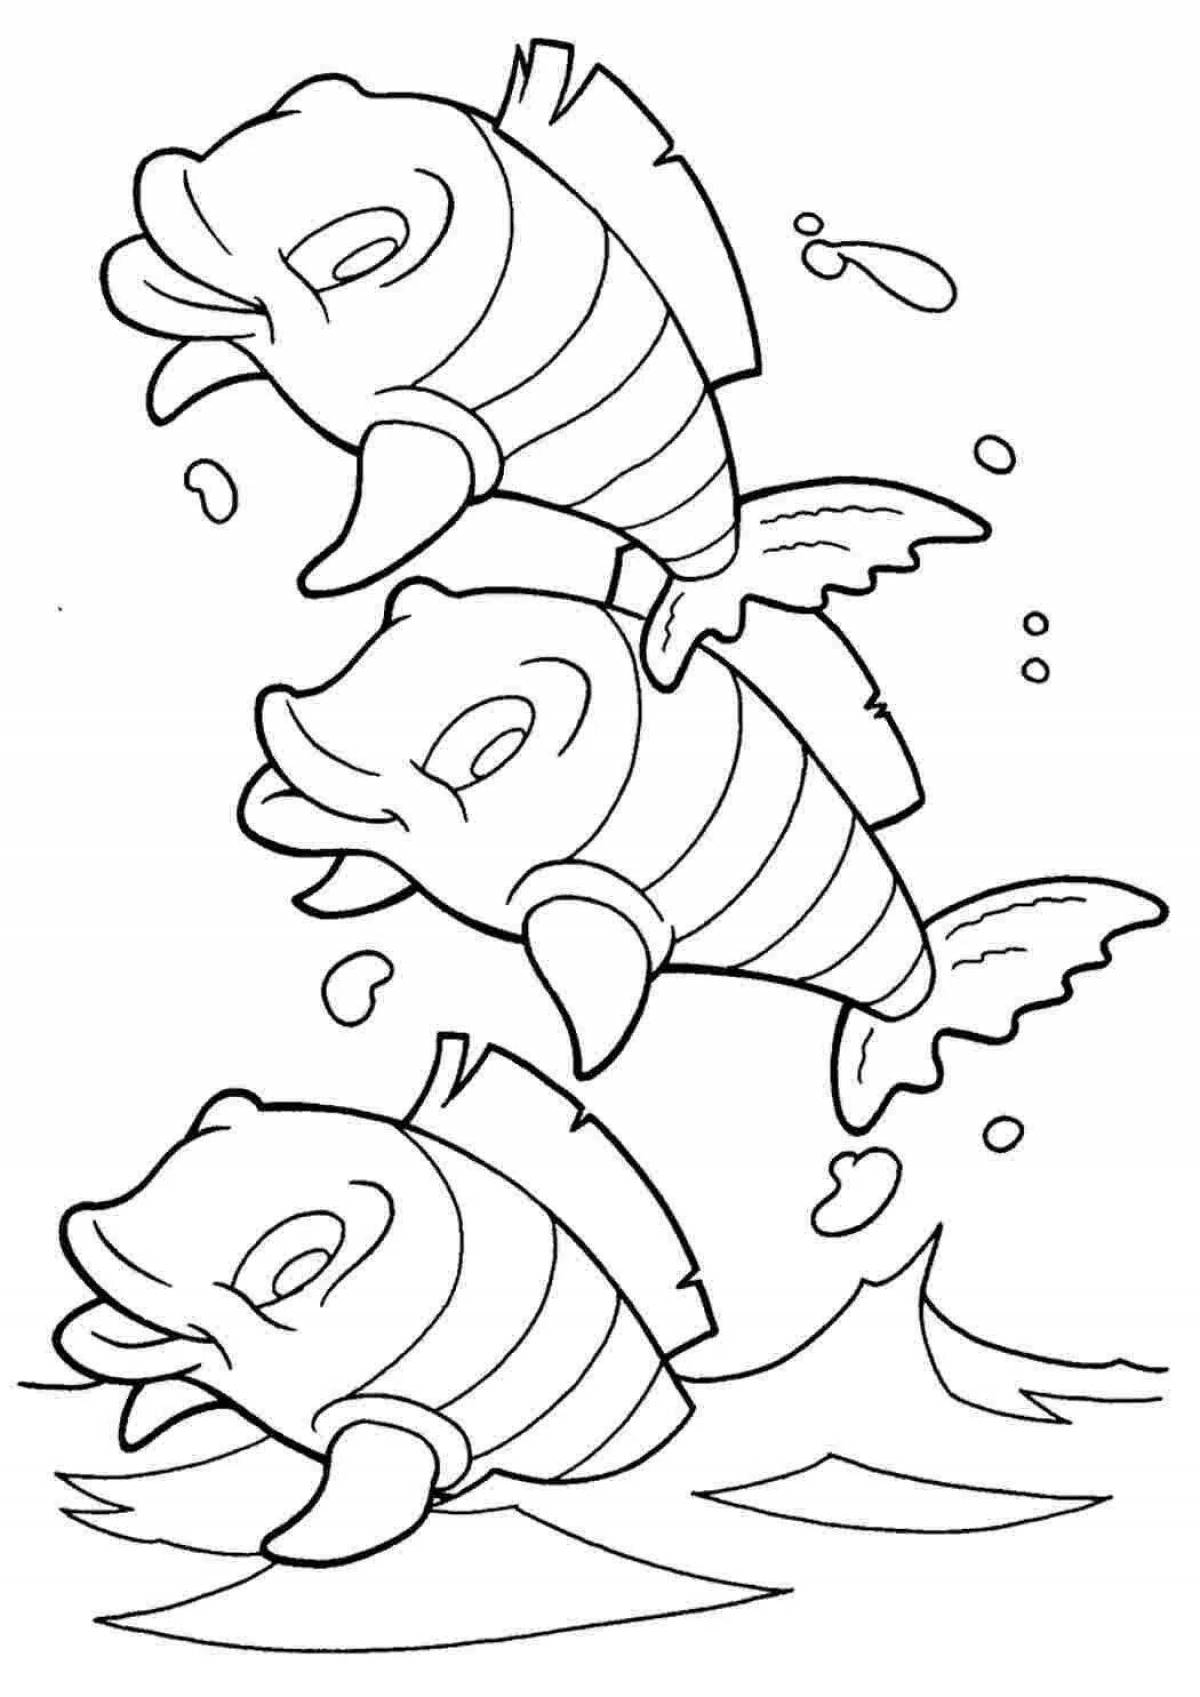 Fun coloring fish for boys